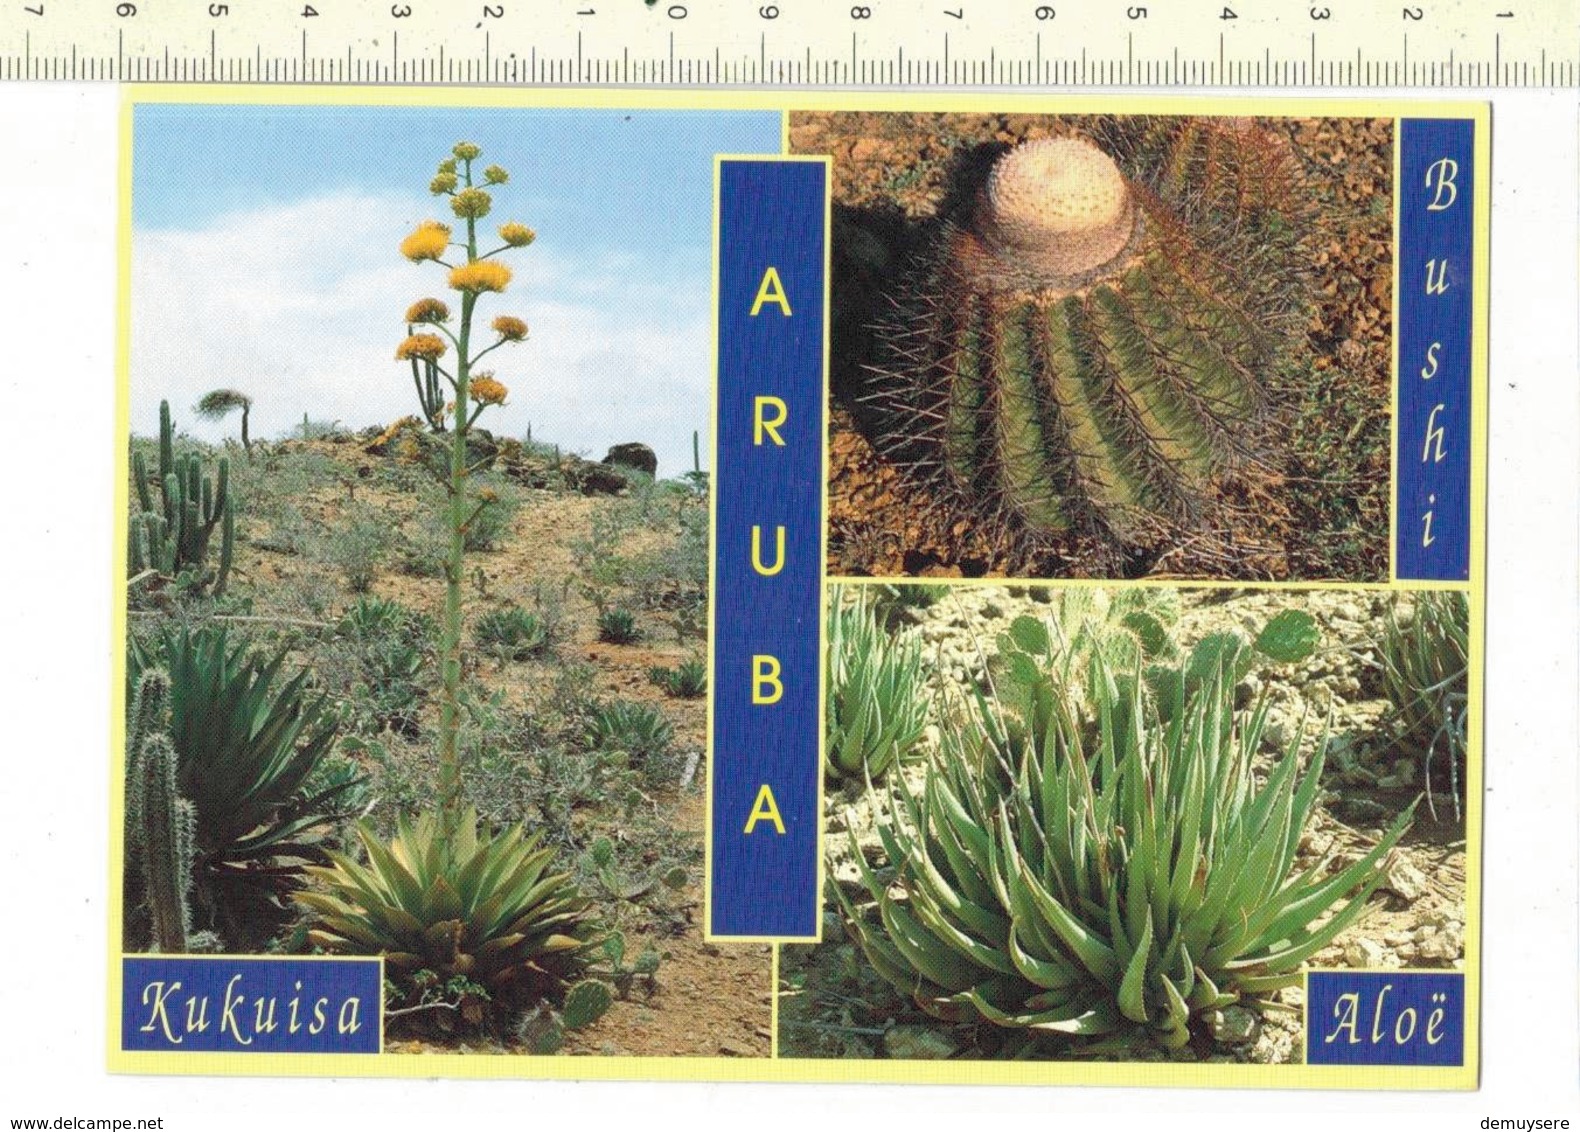 50512 - ARUBA SOME TYPICAL PLANTS FROM THE ISLAND - Aruba